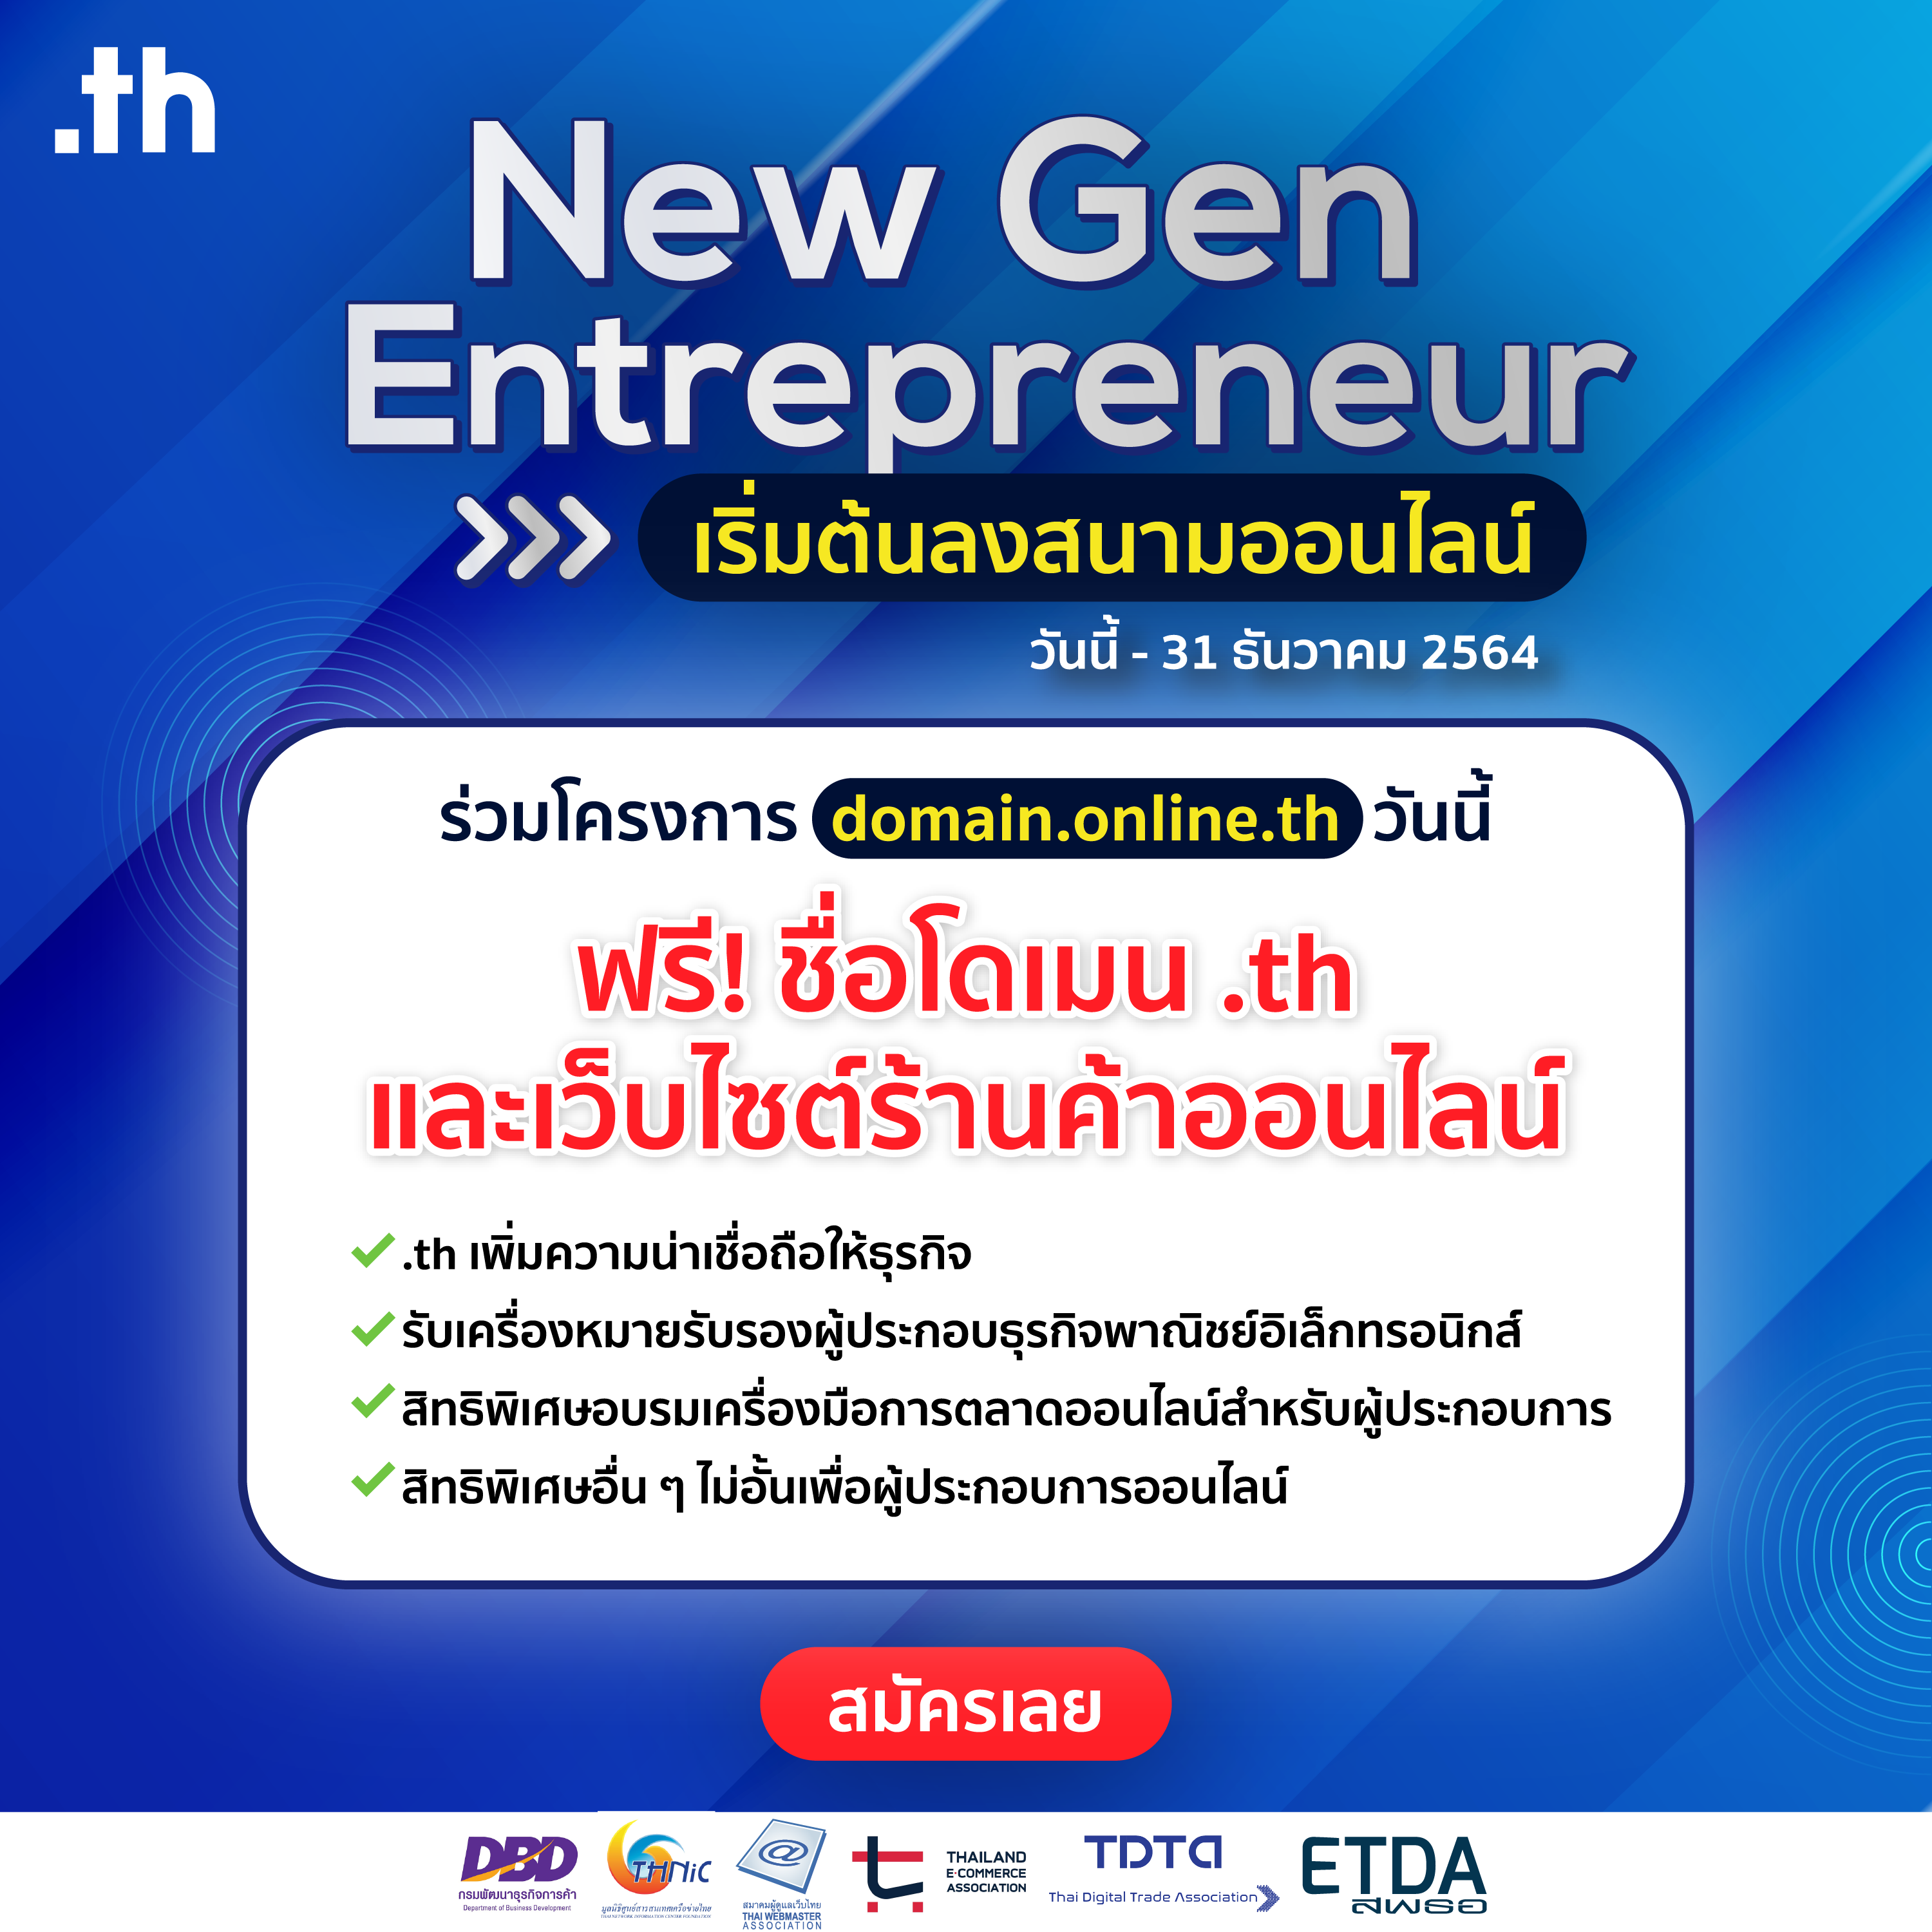 Cover Image for .th New Gen Entrepreneur >> เริ่มต้นลงสนามออนไลน์